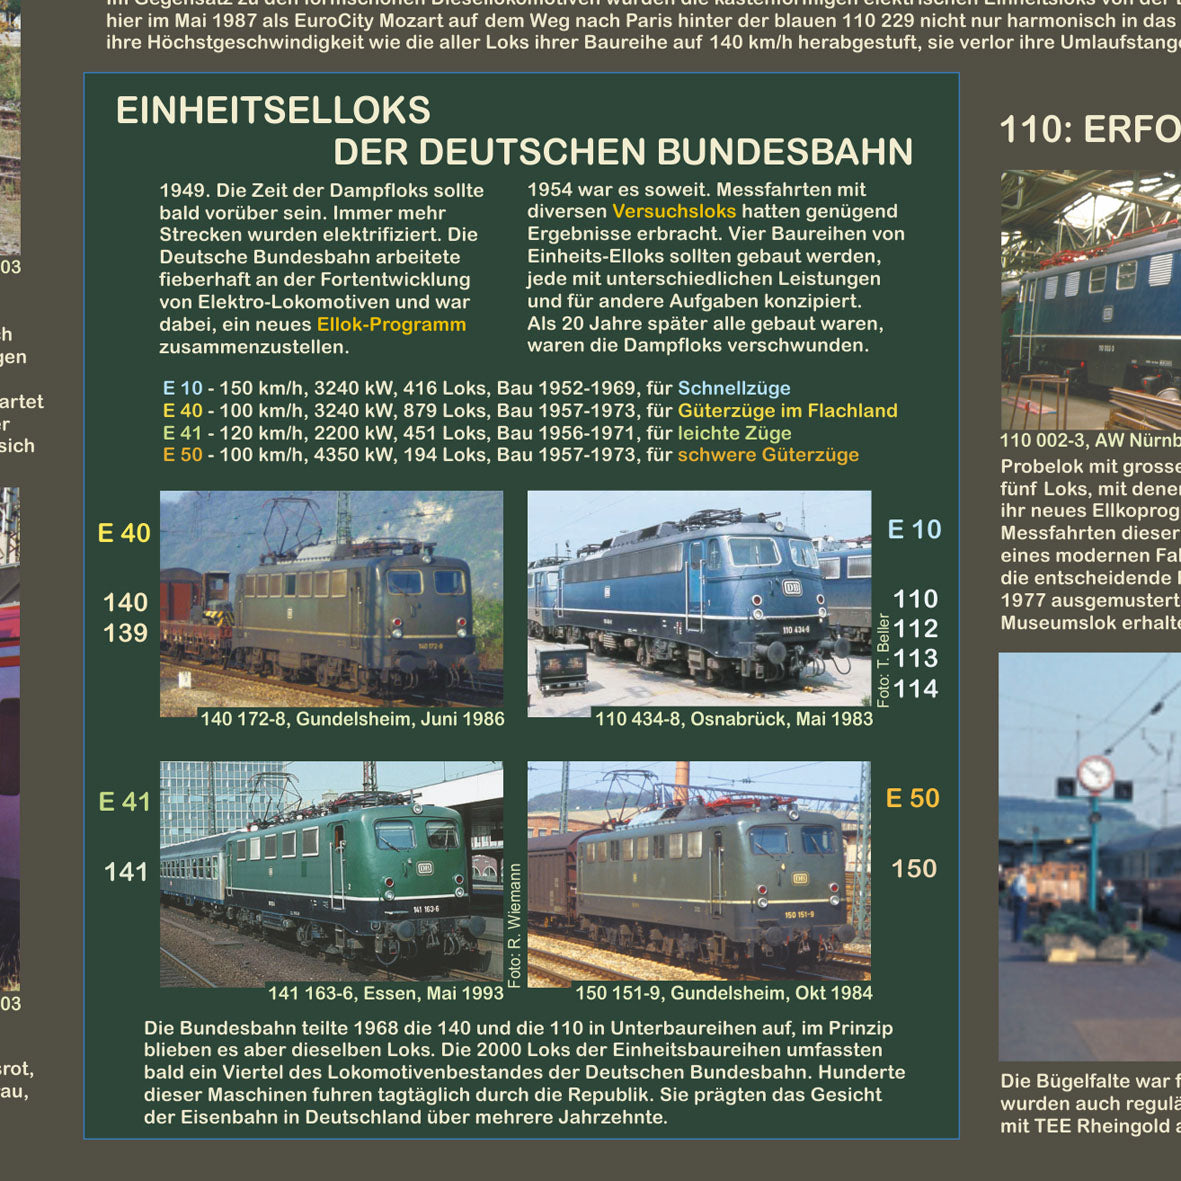 Eisenbahnposter "Baureihe 110"